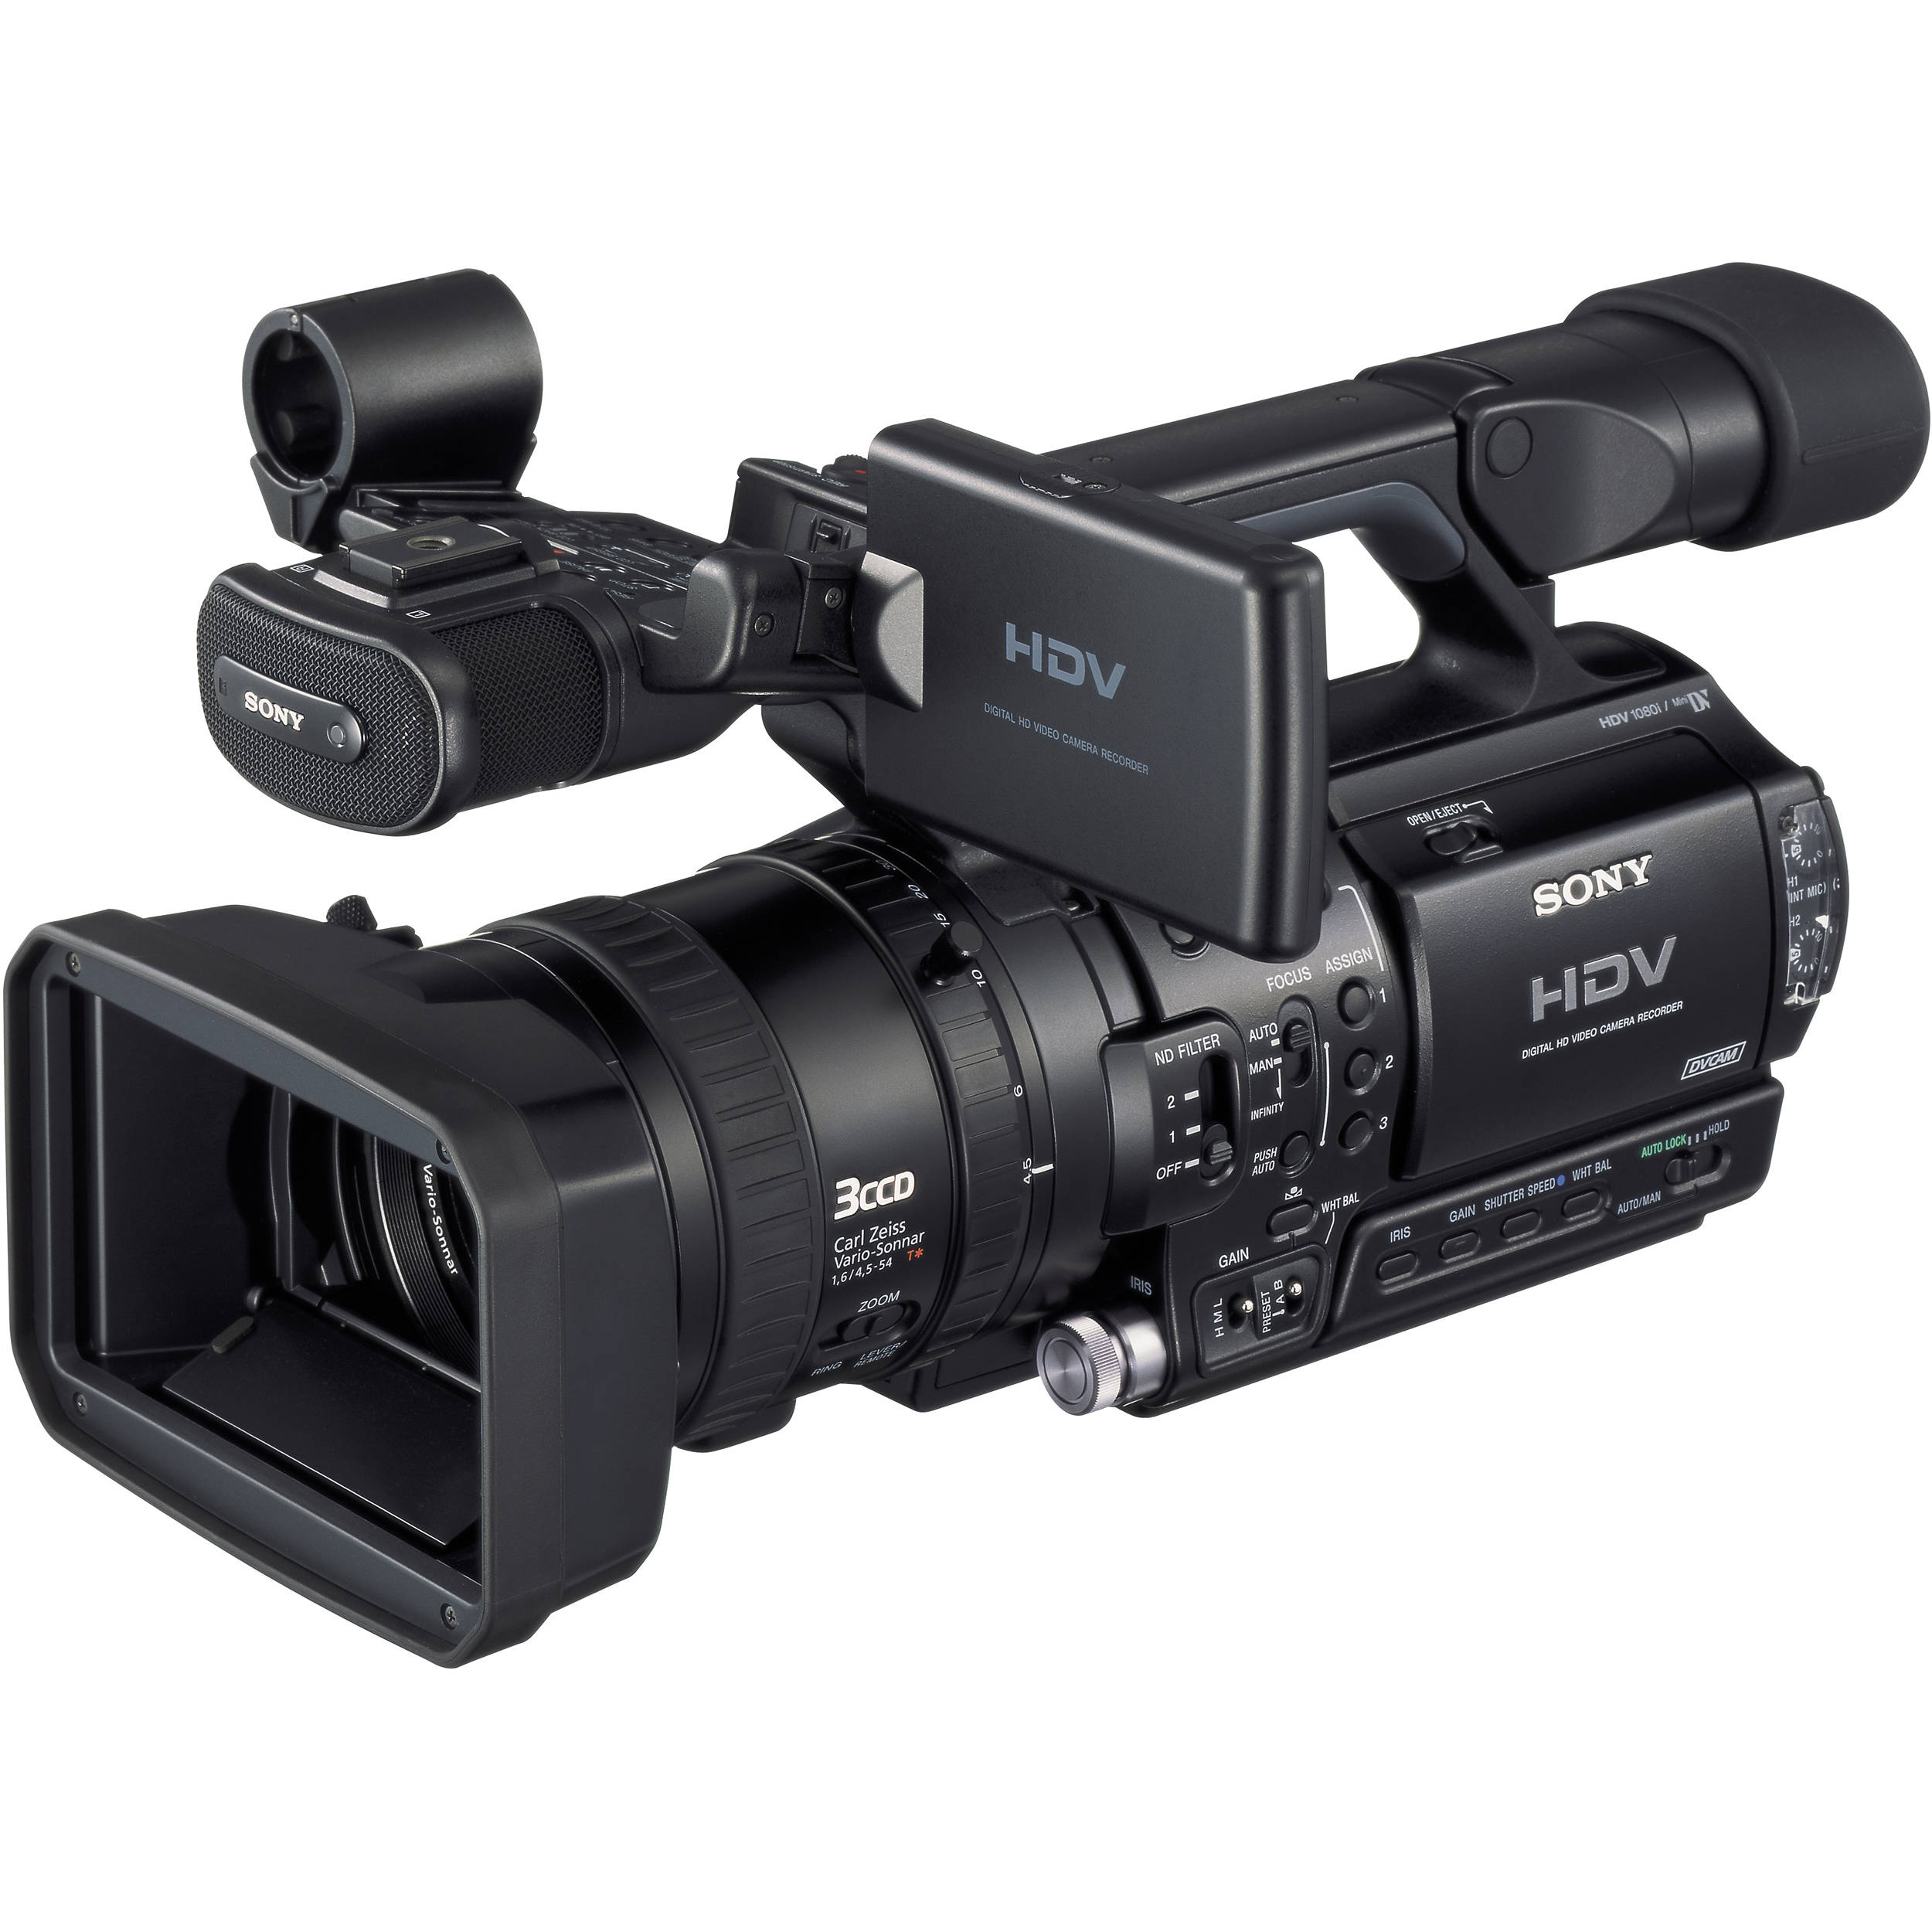 Sony ccd f302 video camera